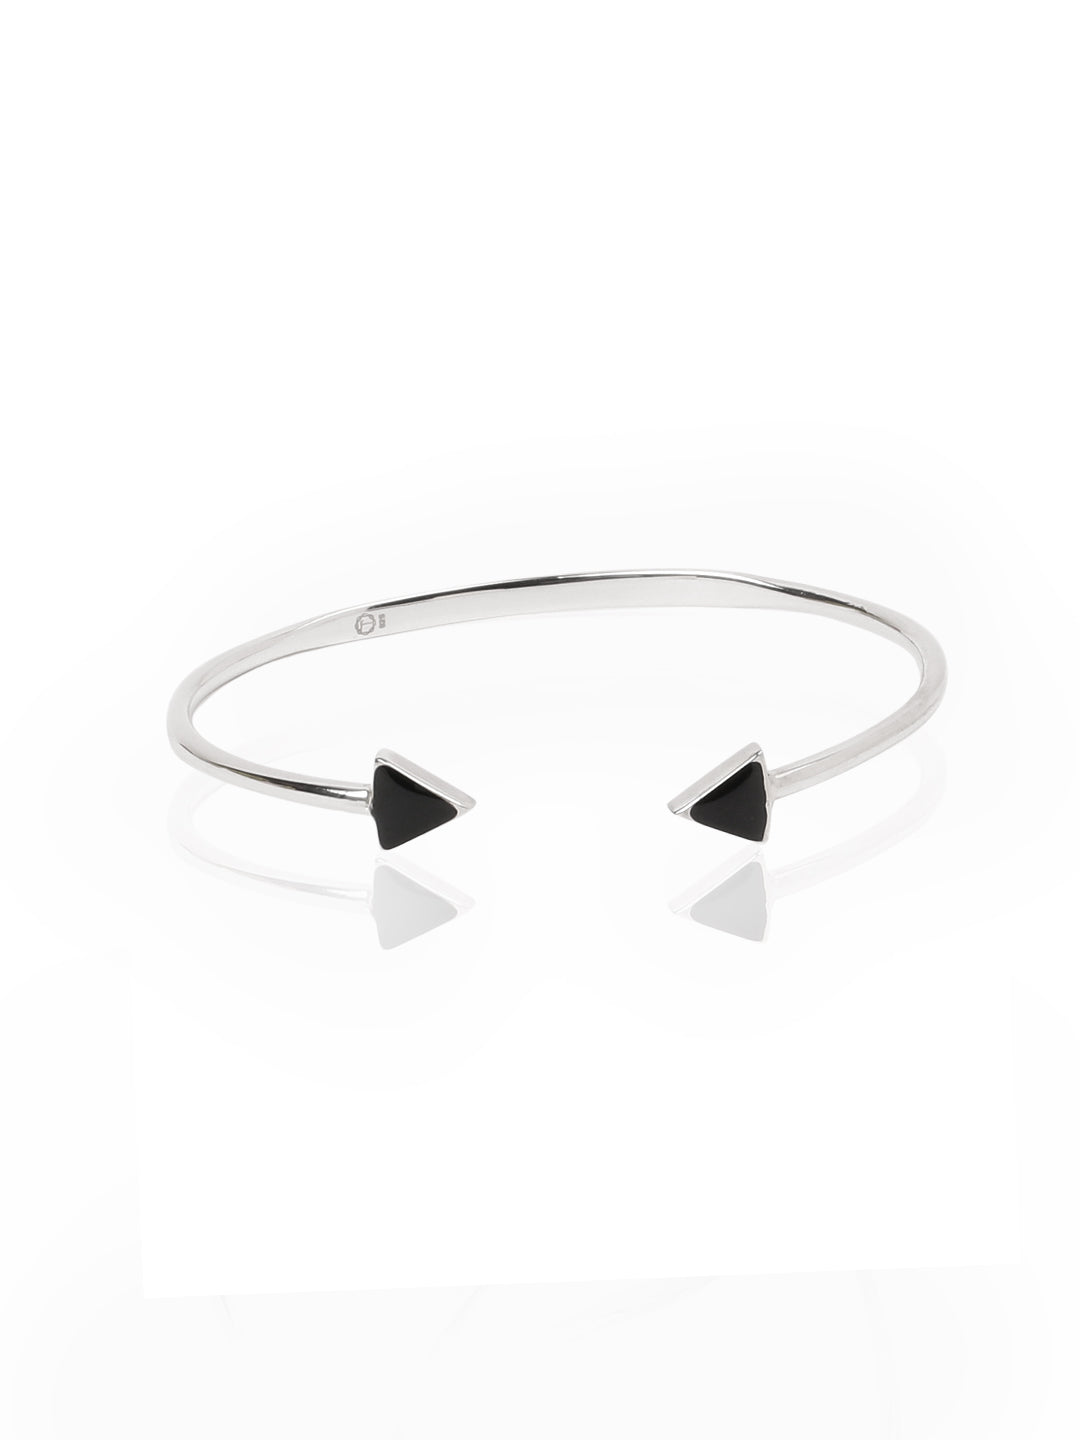 ASHI Silver Arrow Diamond Open Cuff Bangle 85129PESSSLBG - Prestige Jewelers